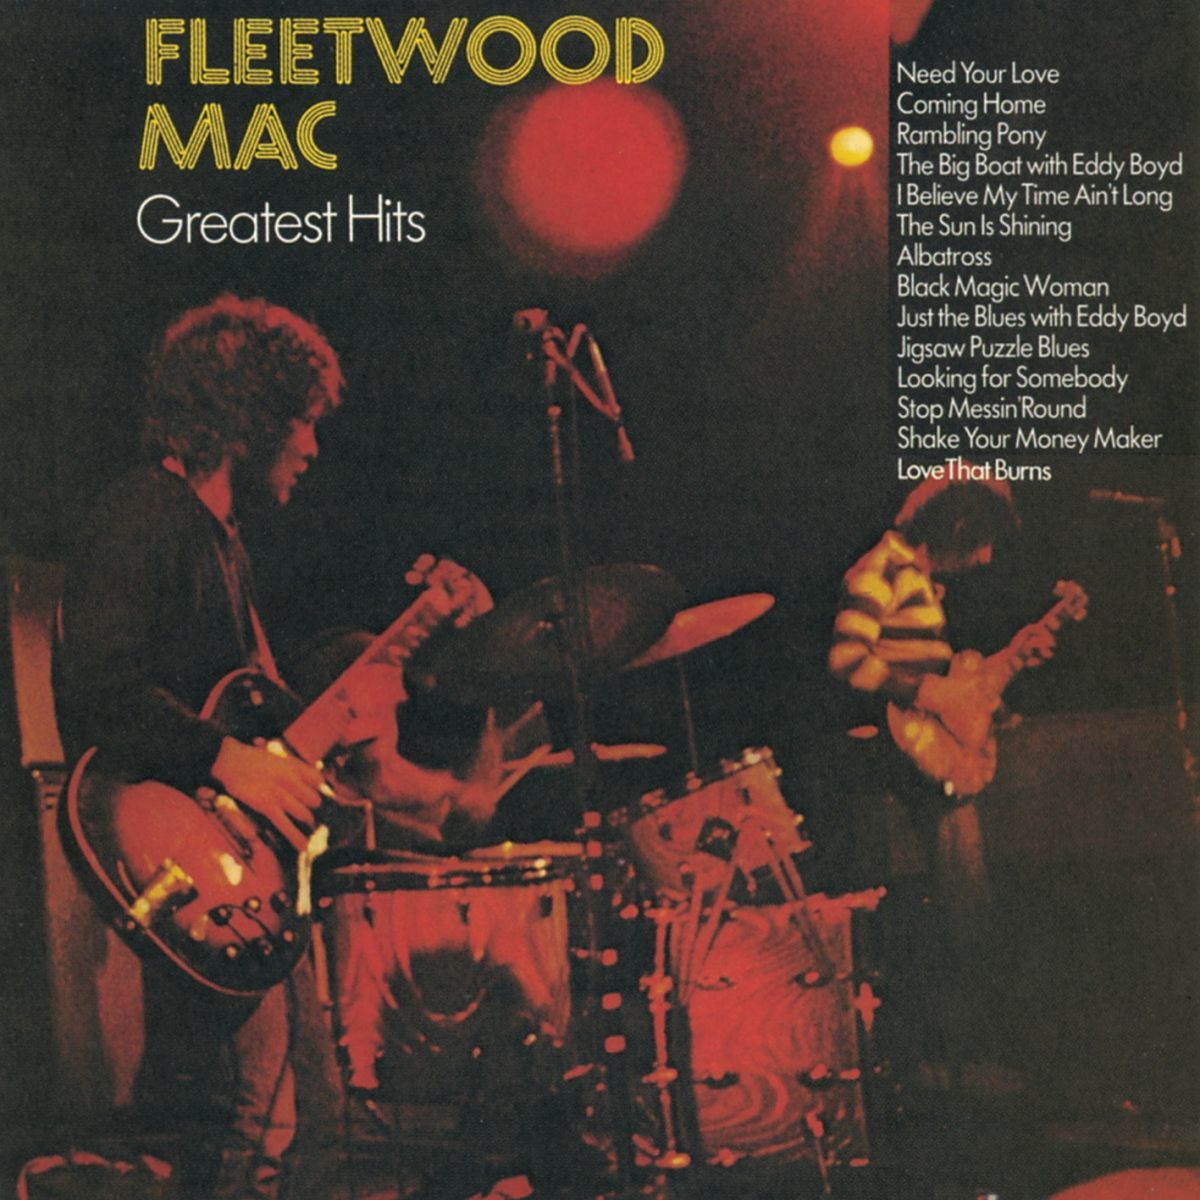 Рок Music On Vinyl Fleetwood Mac - Greatest Hits the greatest golf course in scotland socks children s winter gifts valentine gift ideas socks for girls men s